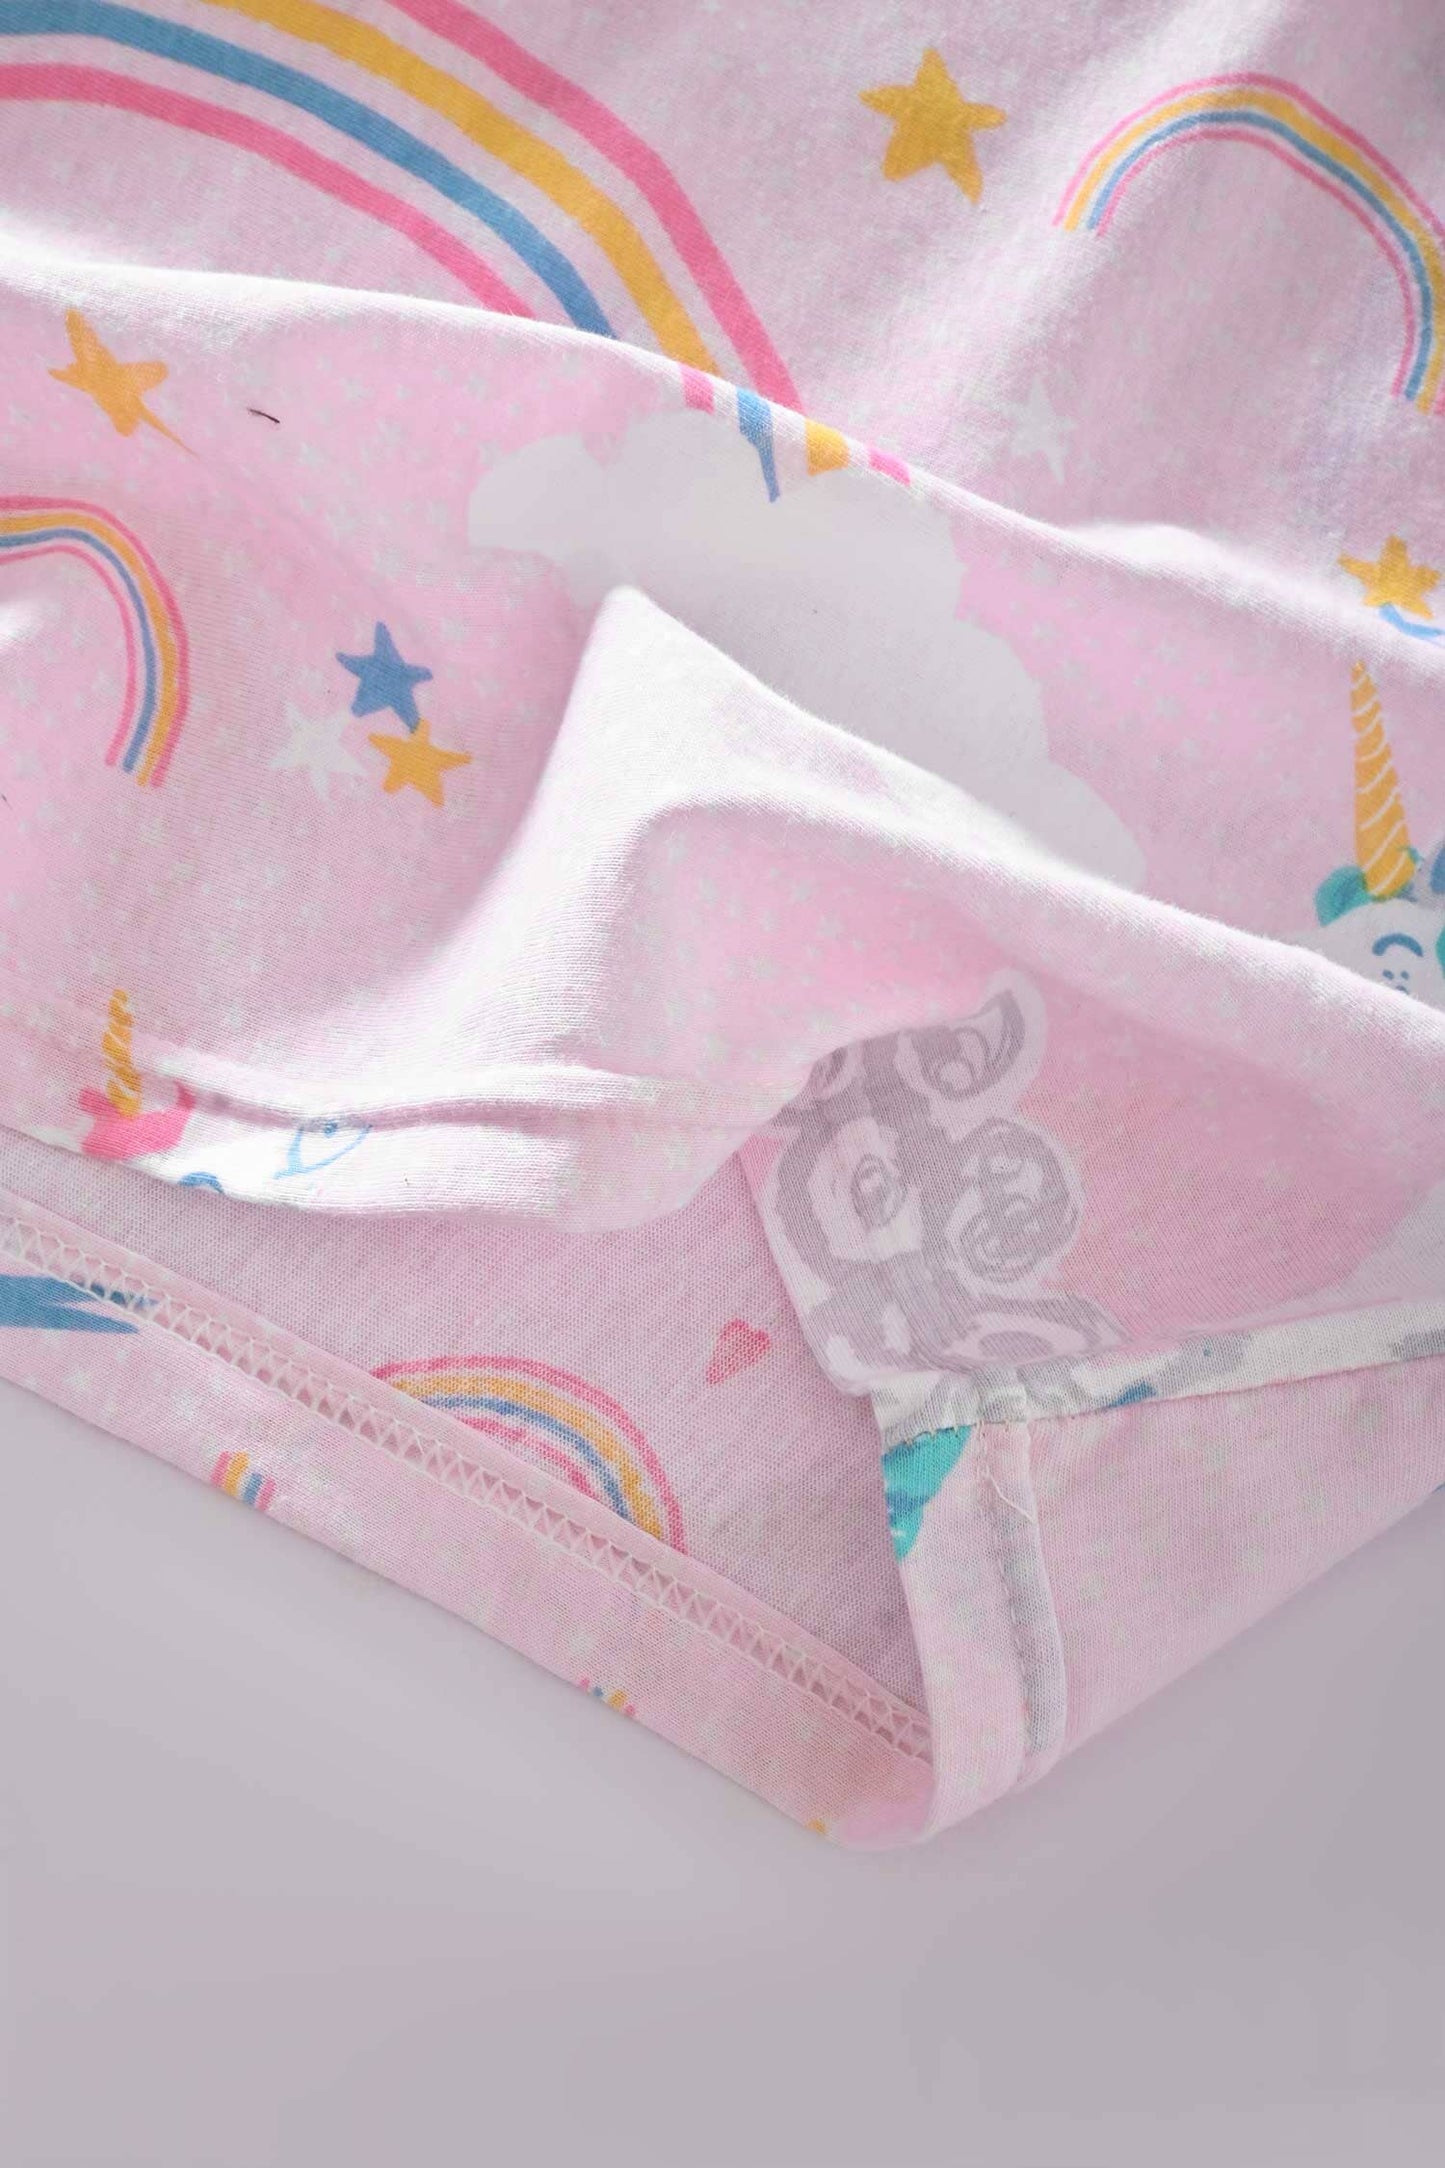 Junior Republic Kid's Rainbow Unicorn Printed Tee Shirt